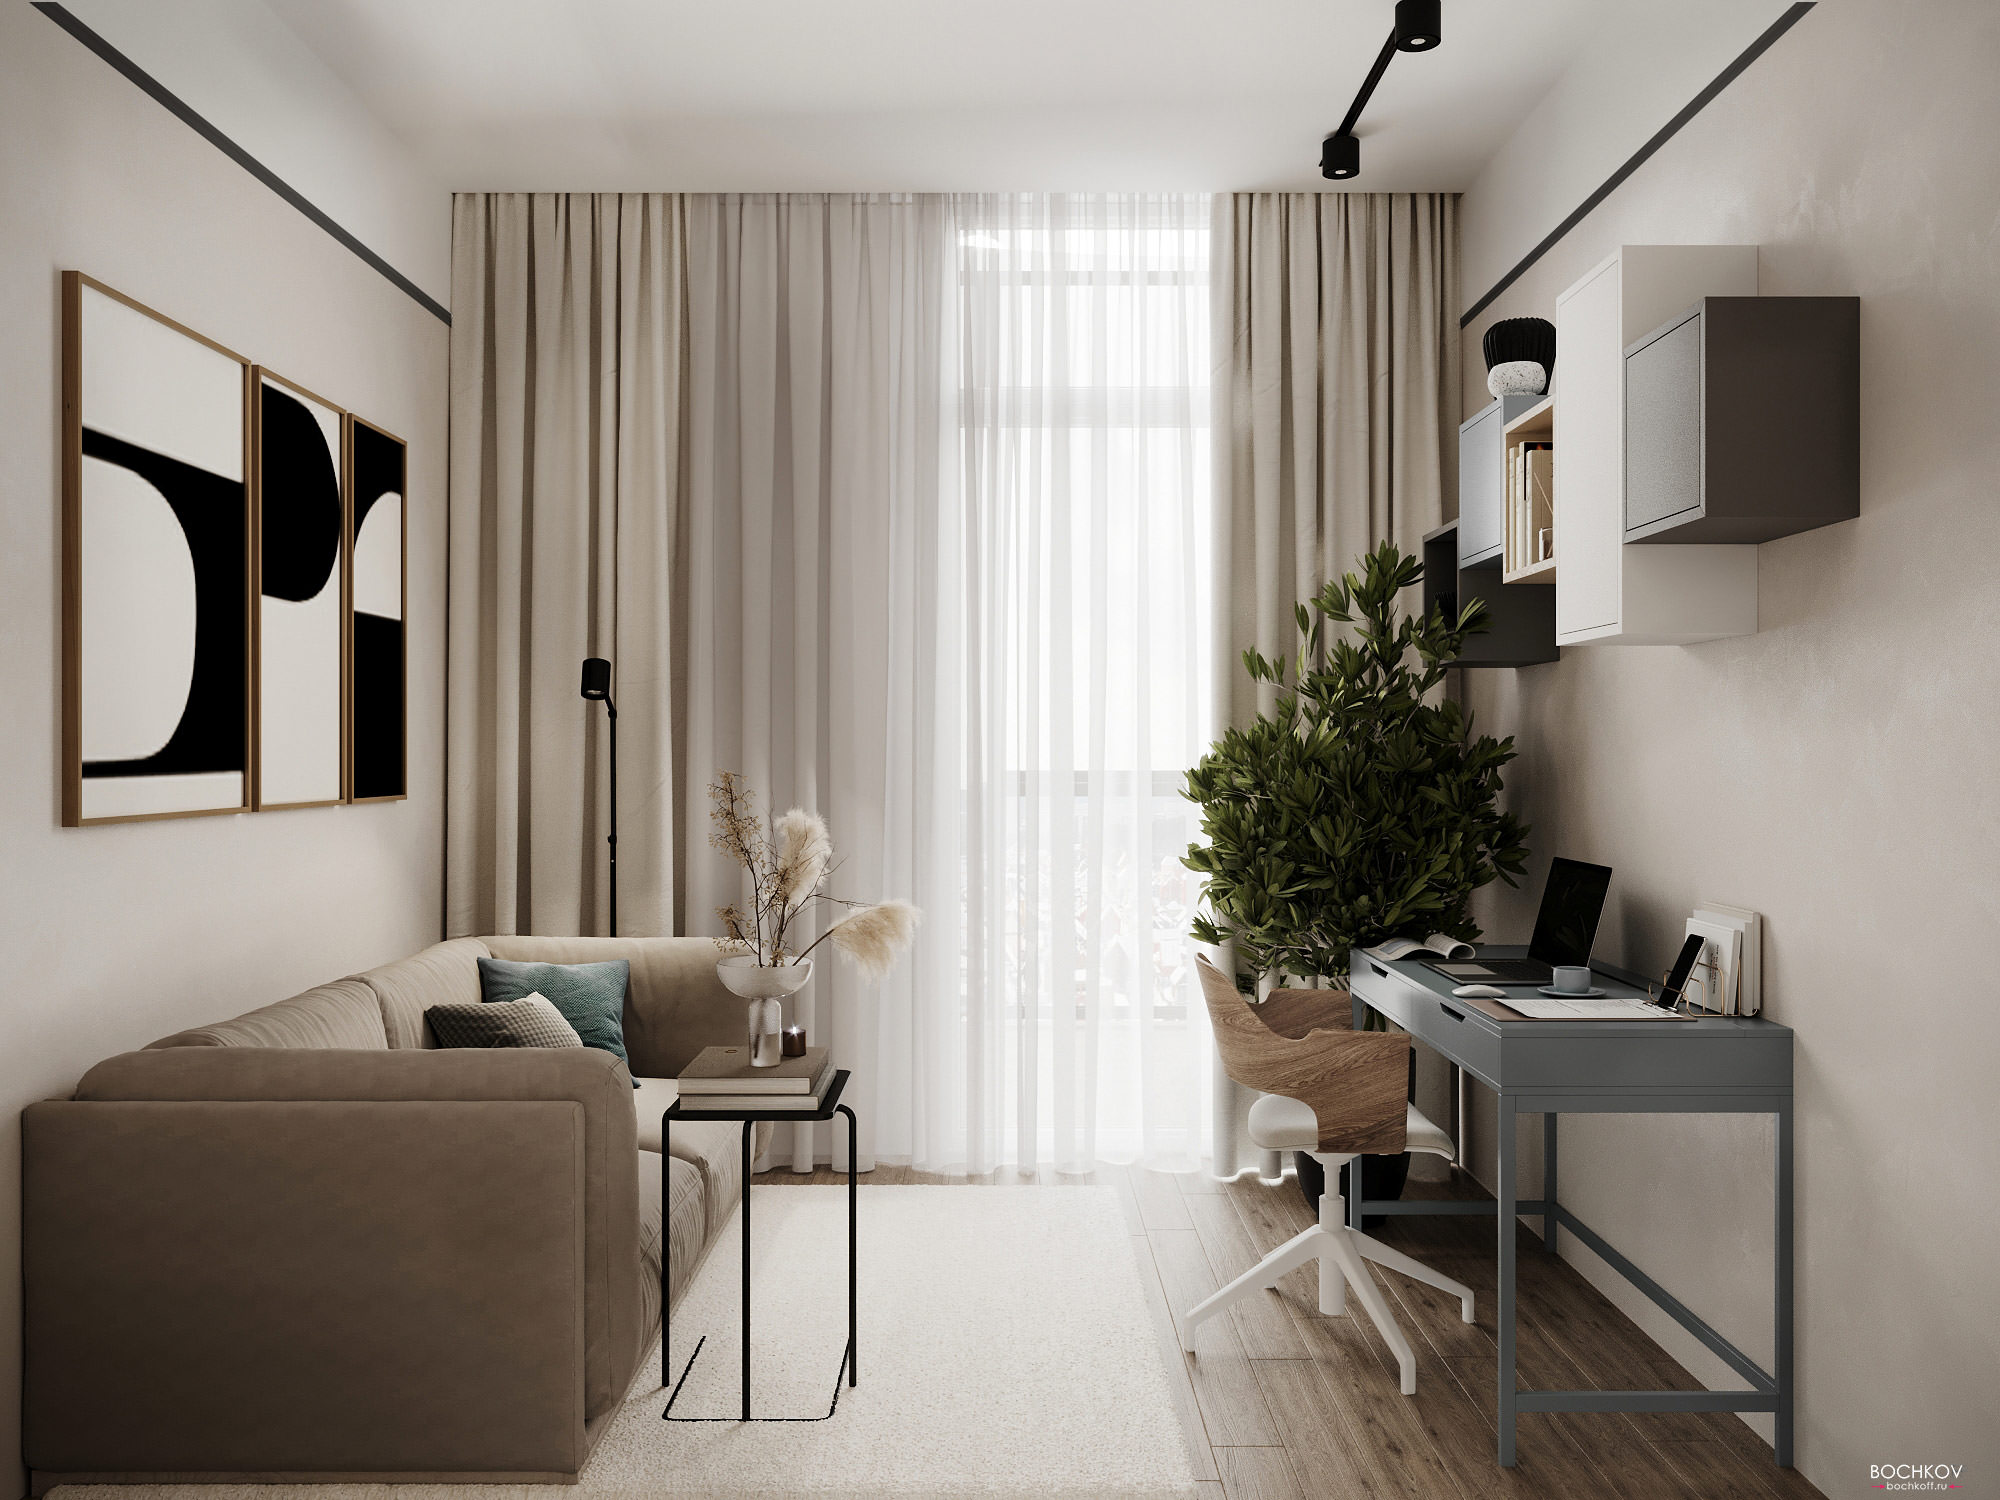 Гостевая комната, кабинет вид 1, дизайн проект квартиры Москва SLuda01